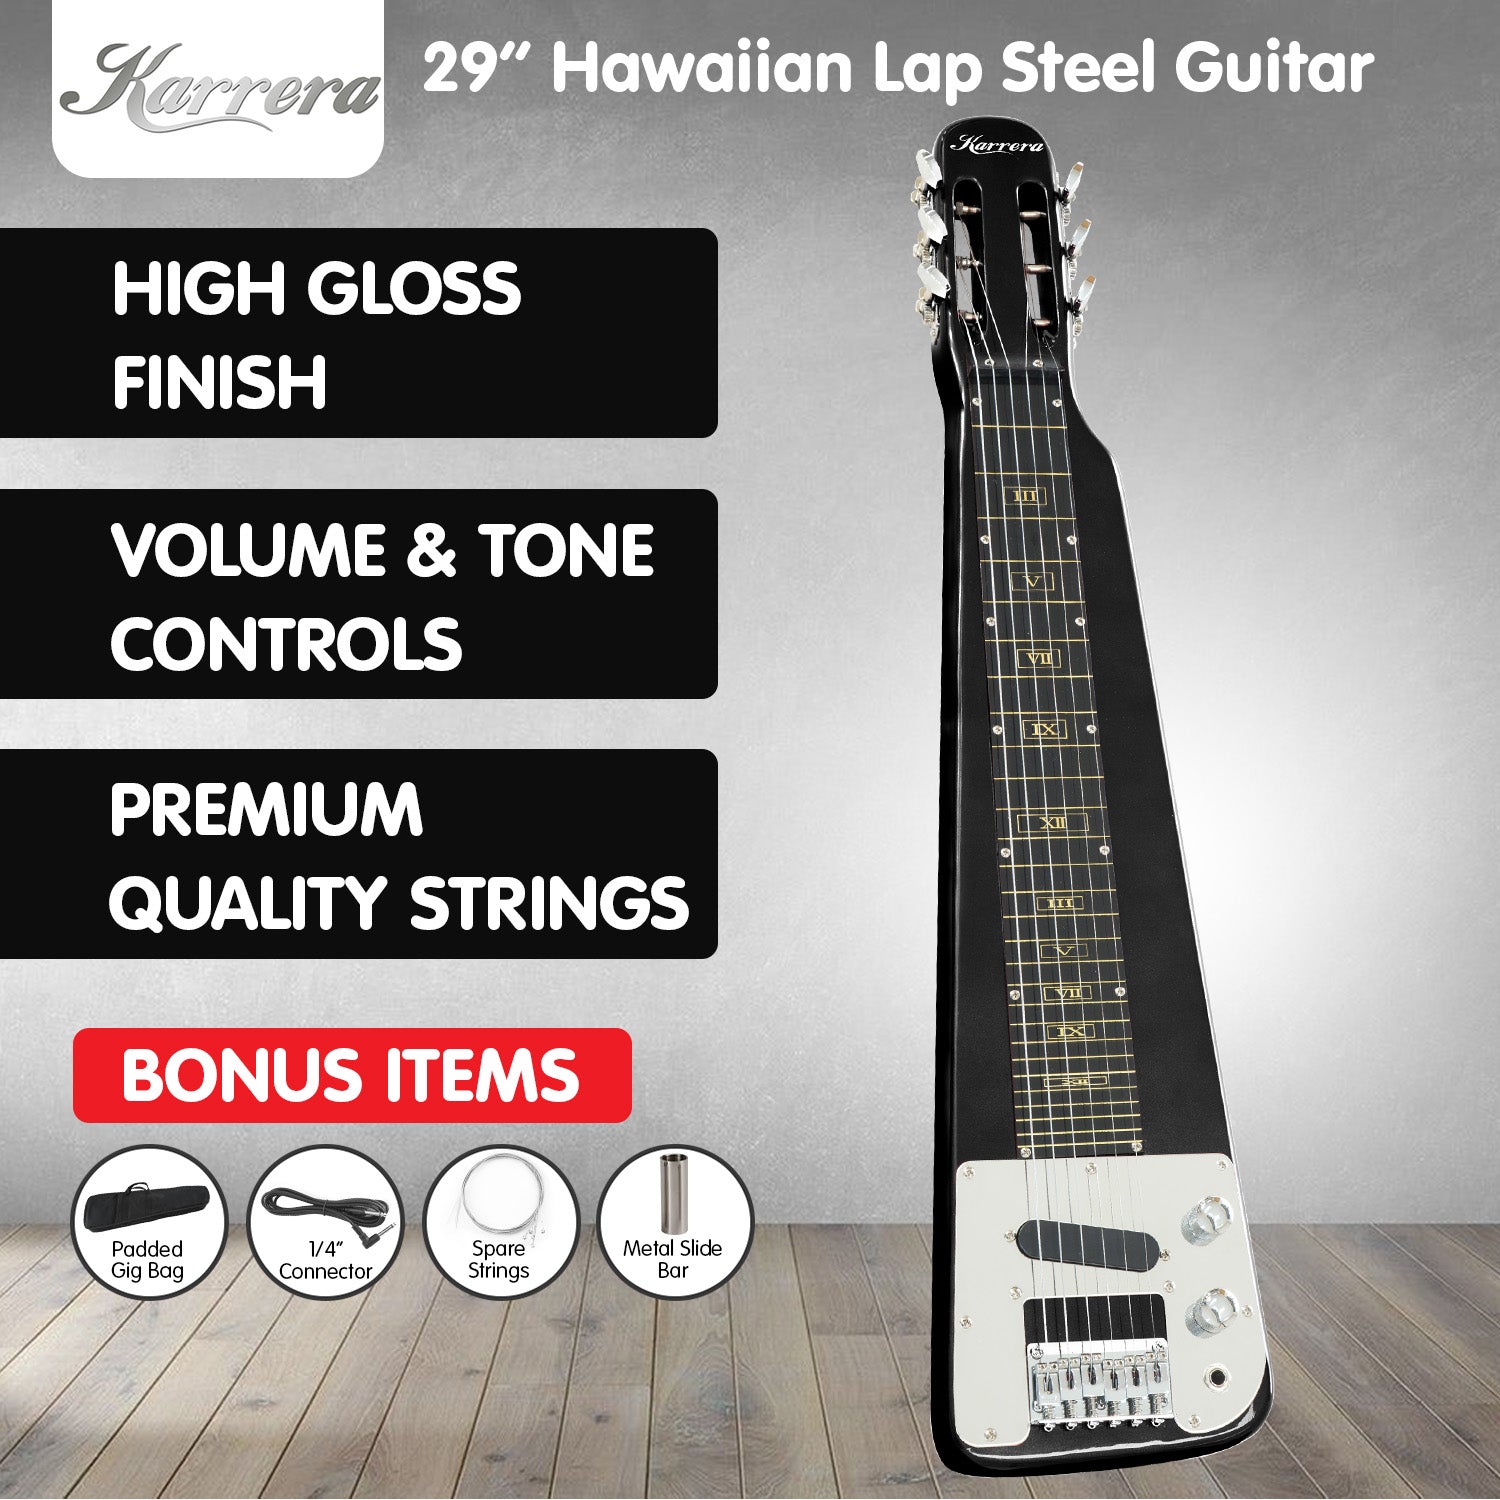 Karrera 29in 6-String Lap Steel Hawaiian Guitar - Black - SILBERSHELL